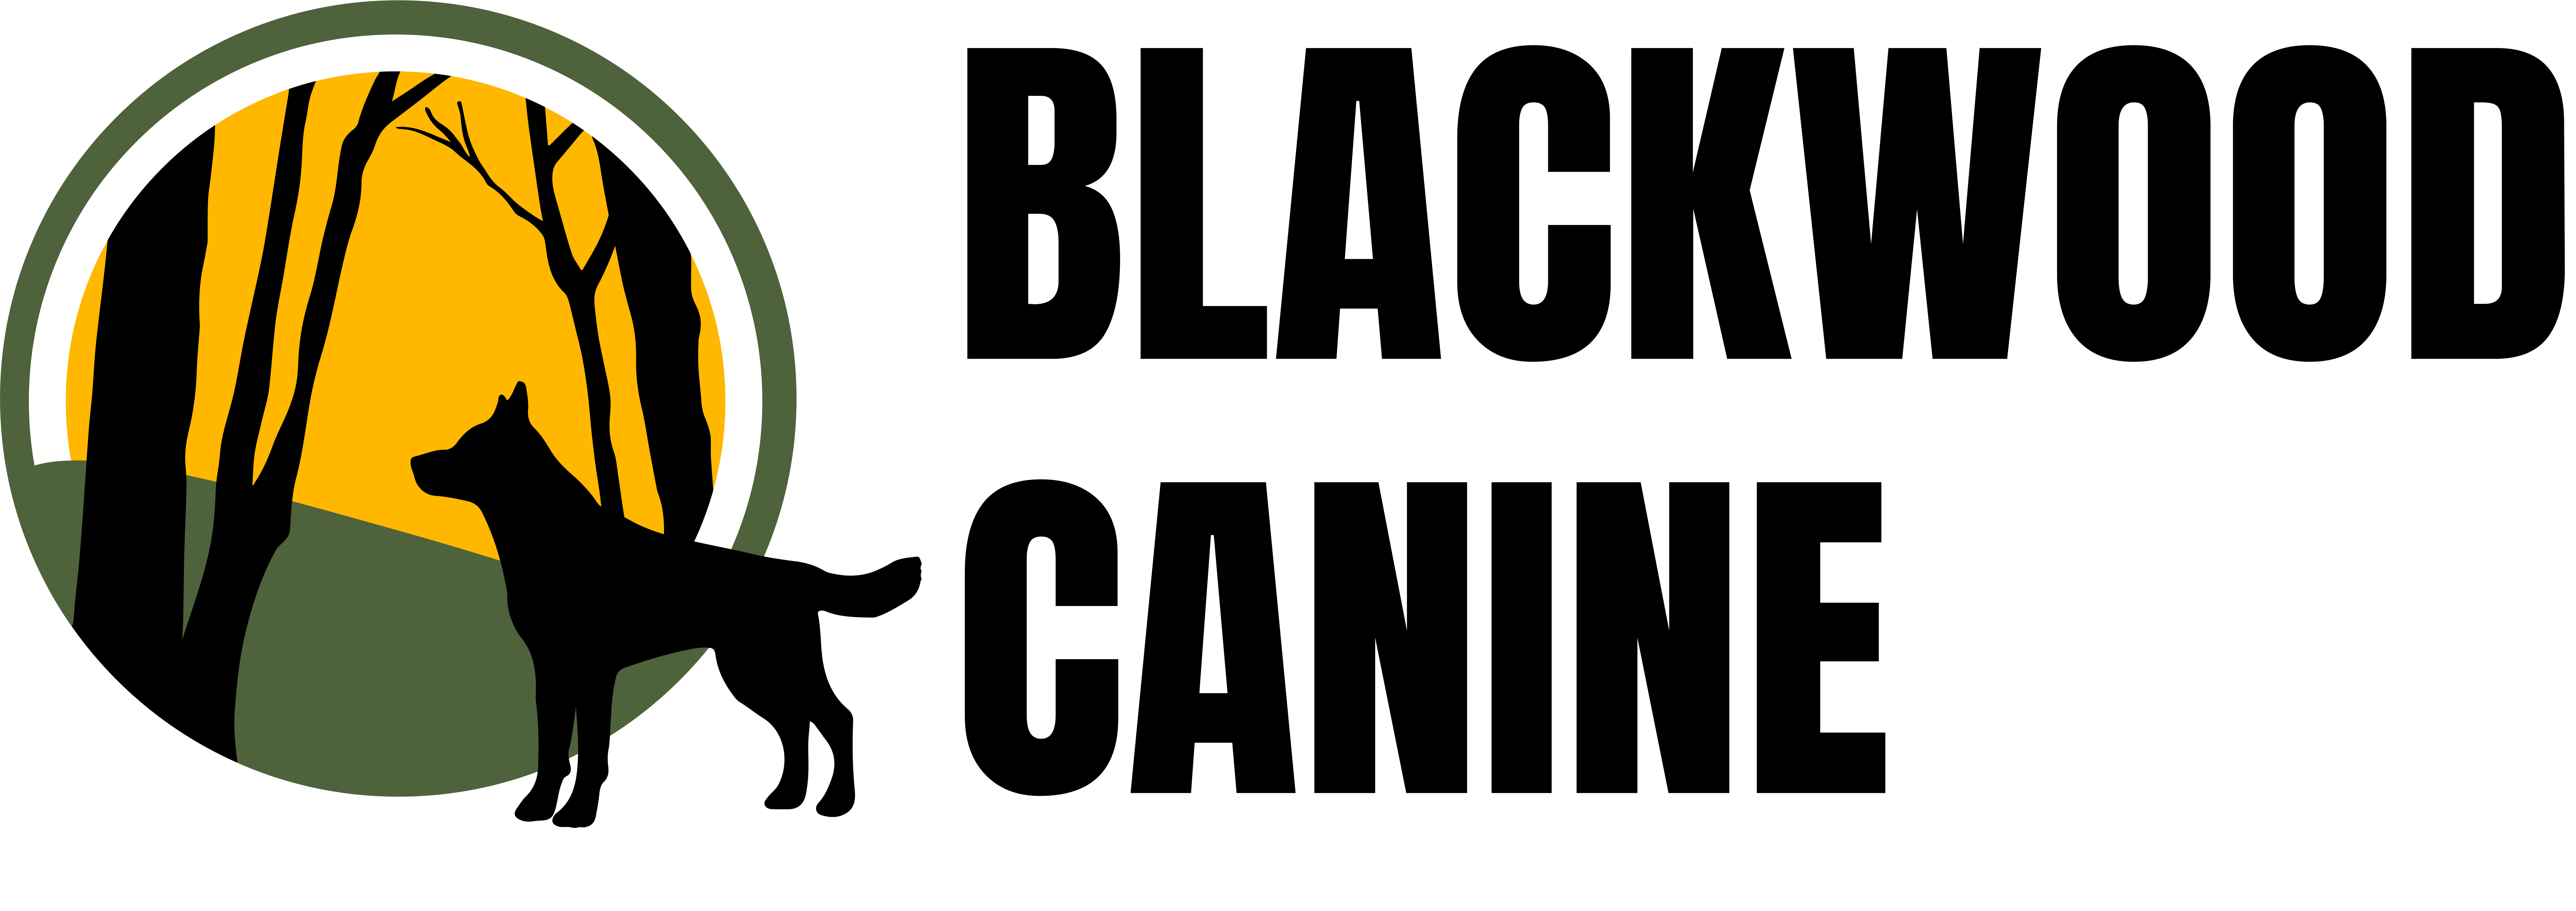 Blackwood Canine footer logo